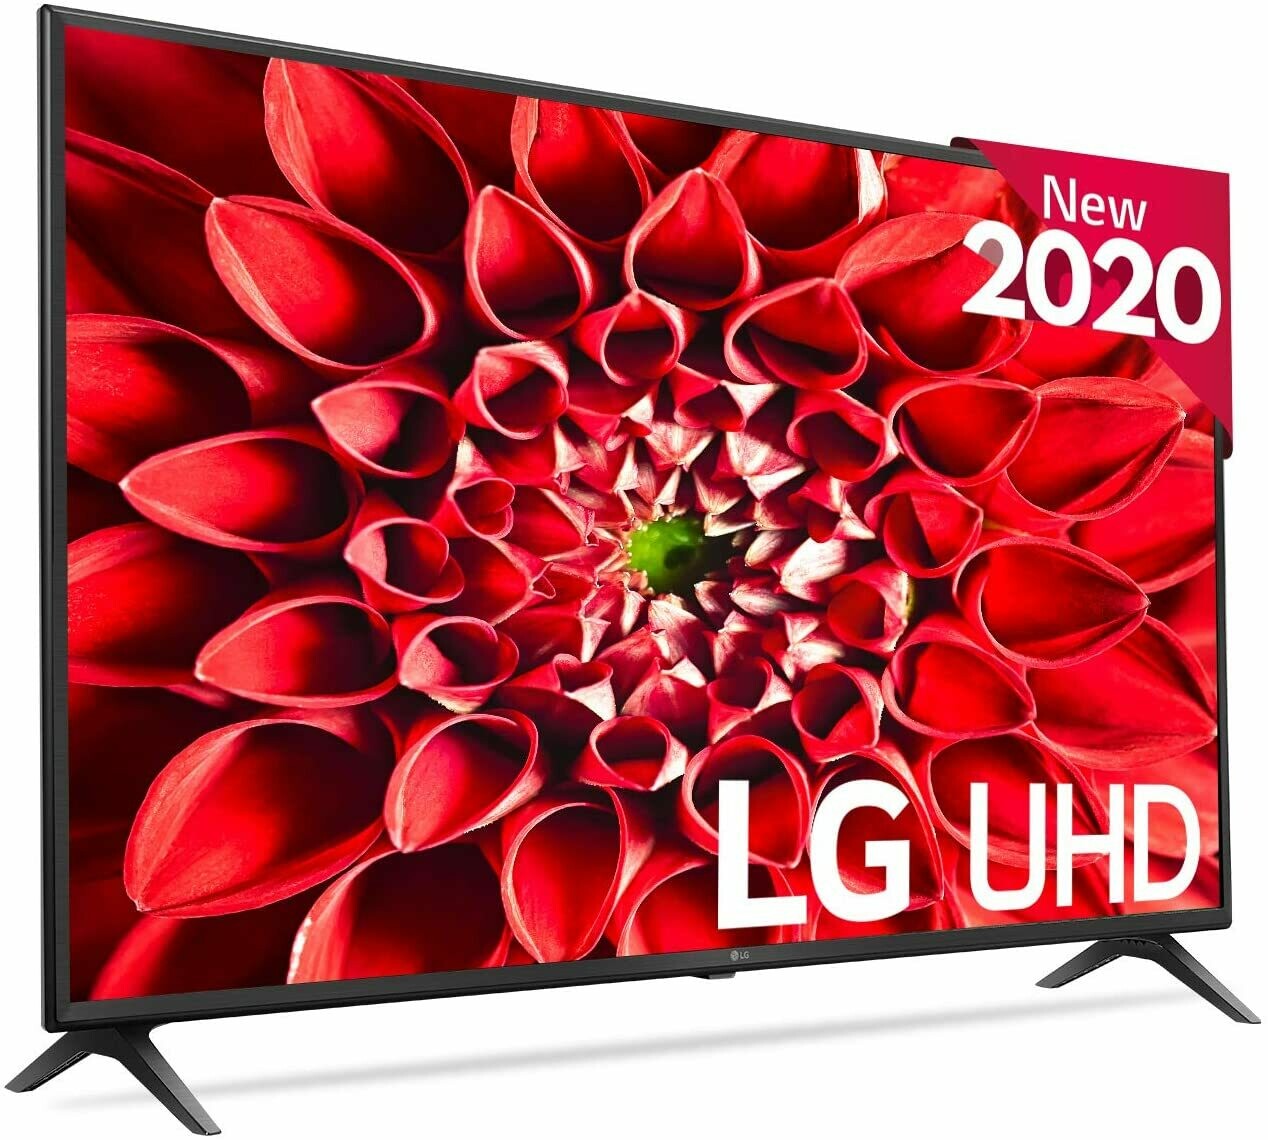 LG 55 inches Smart TV 4K UHD-55UN7100